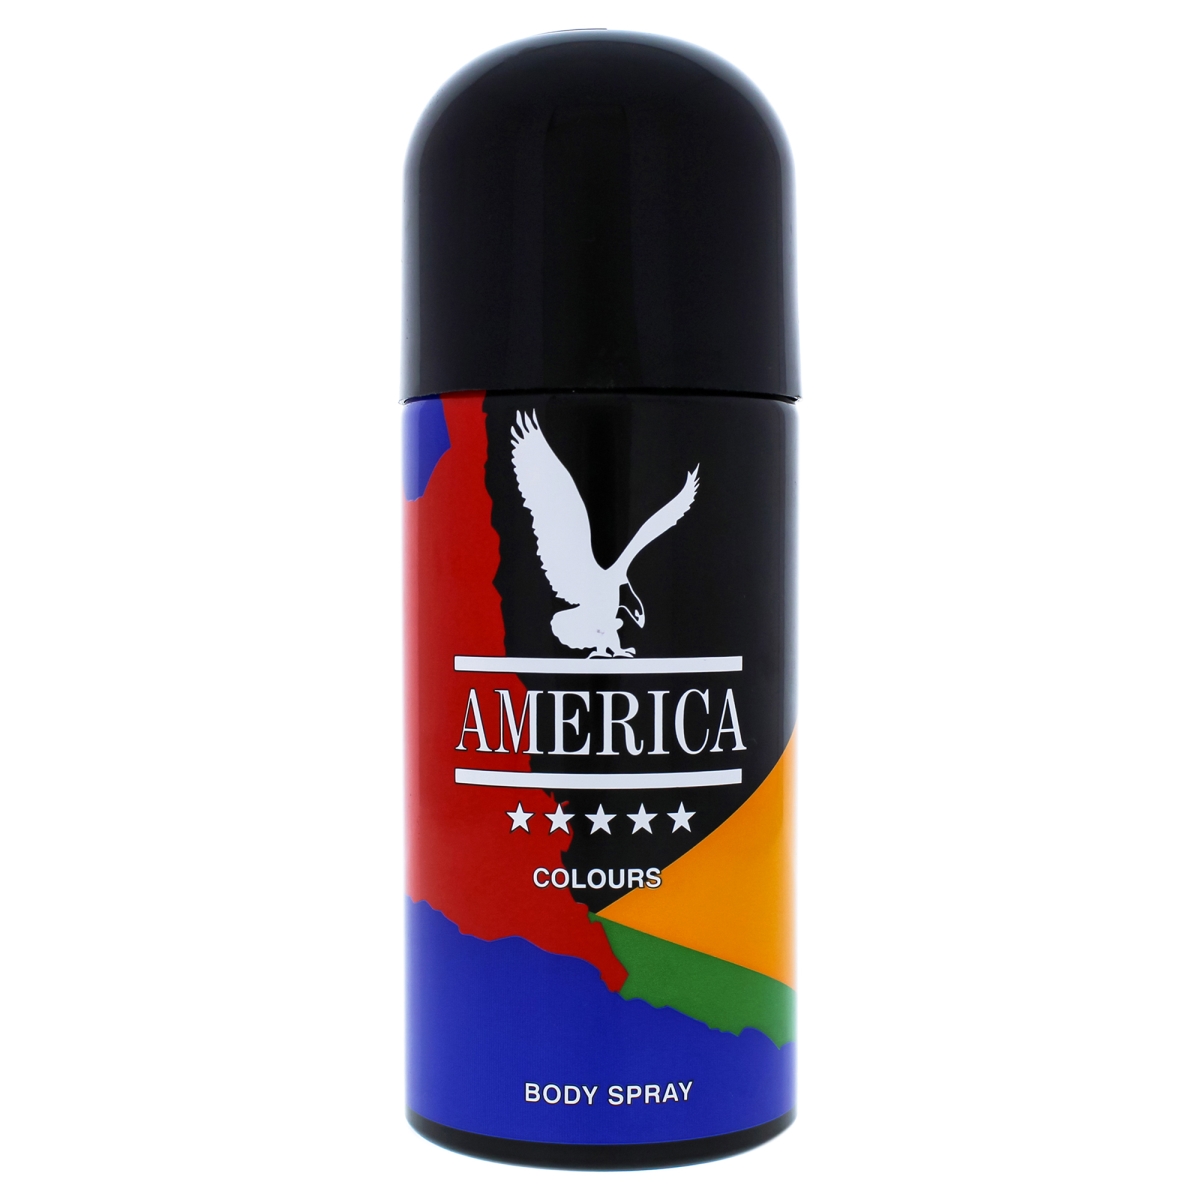 I0088756 America Colours Body Spray For Men - 5.1 Oz